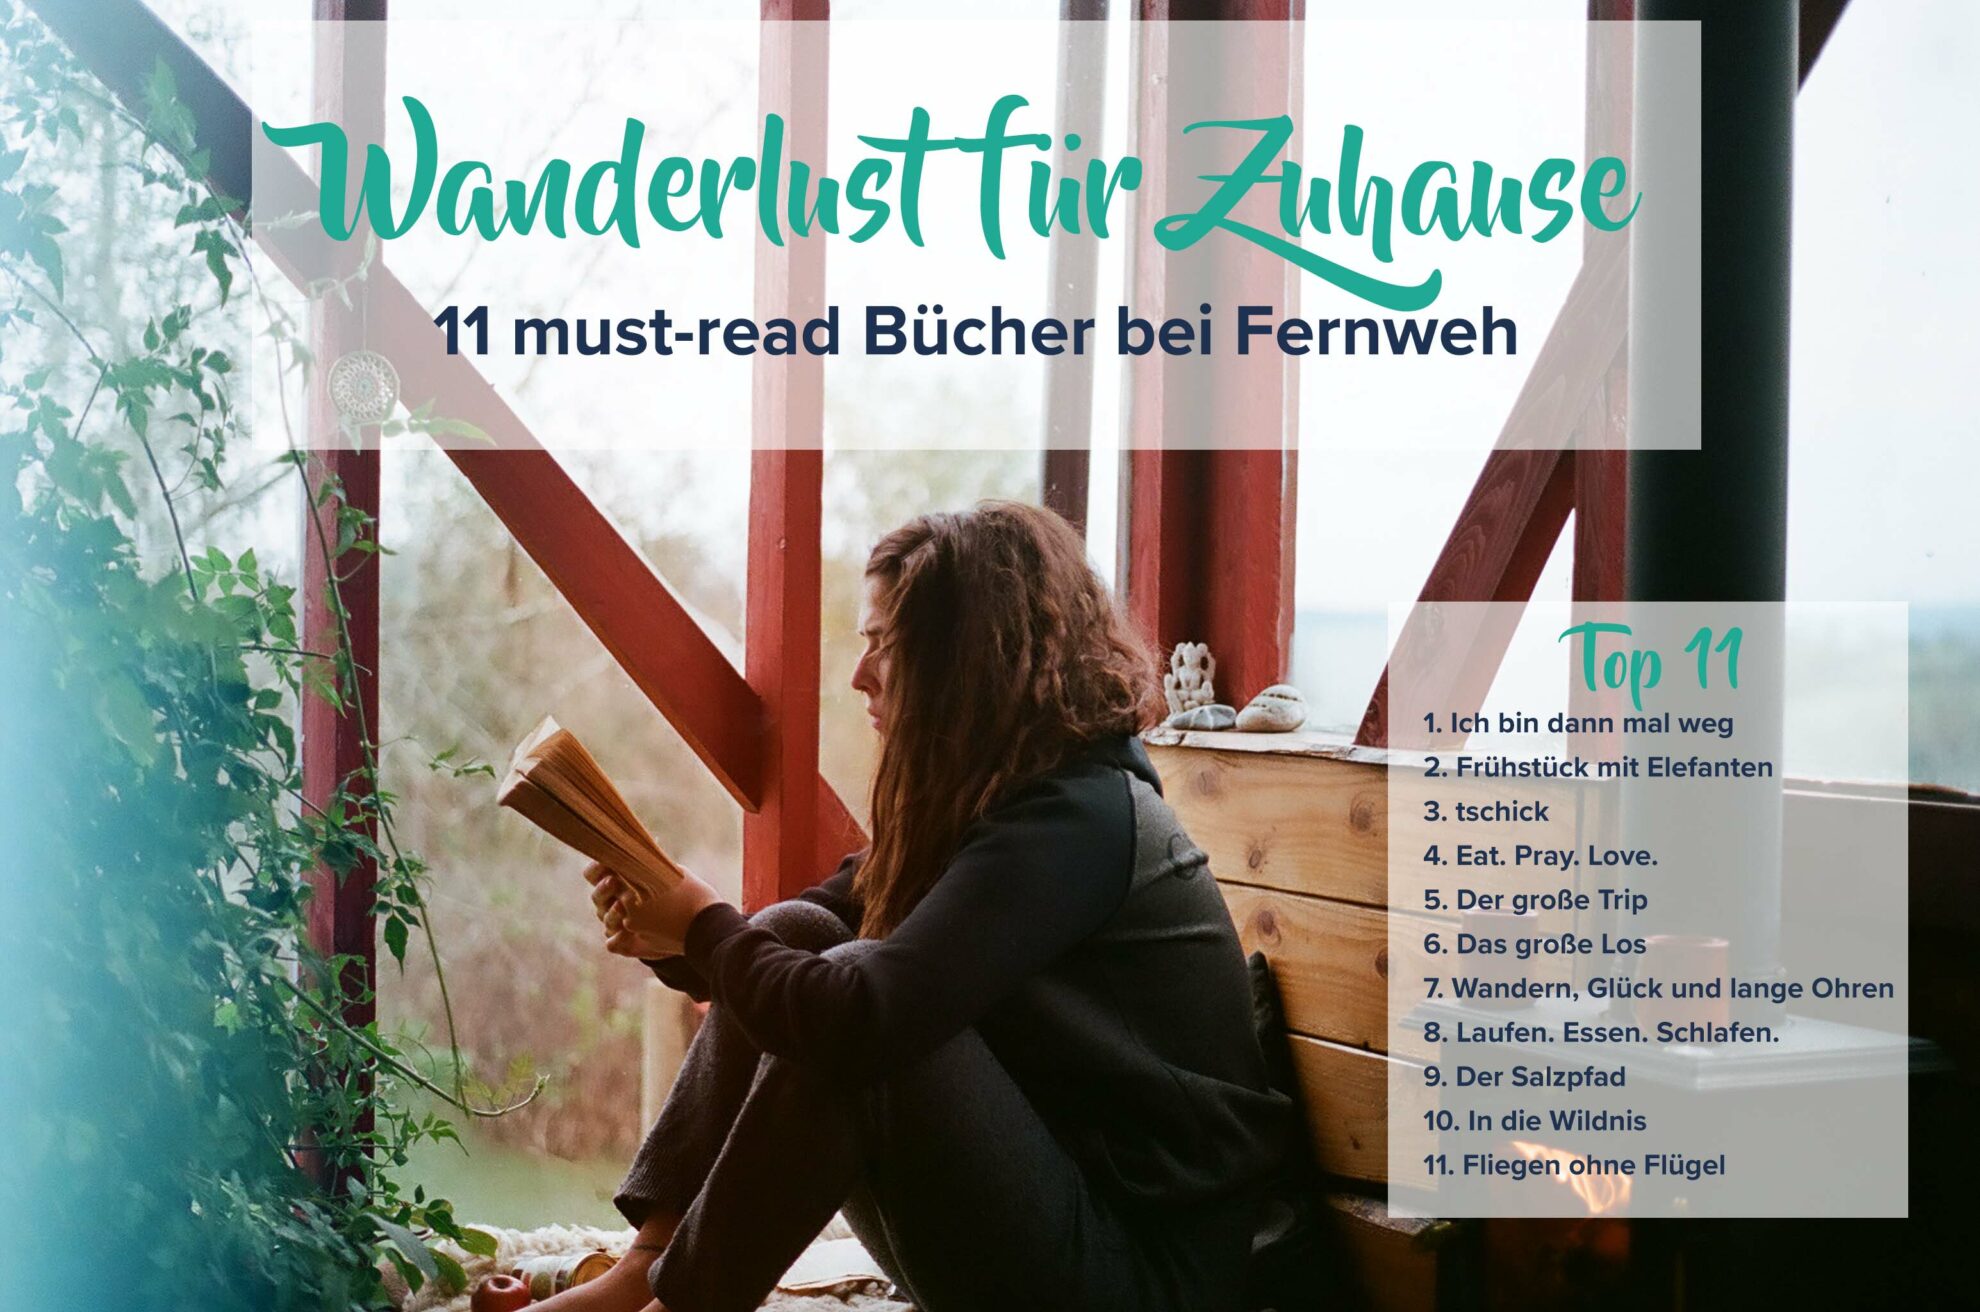 11 must-read Bücher bei Fernweh